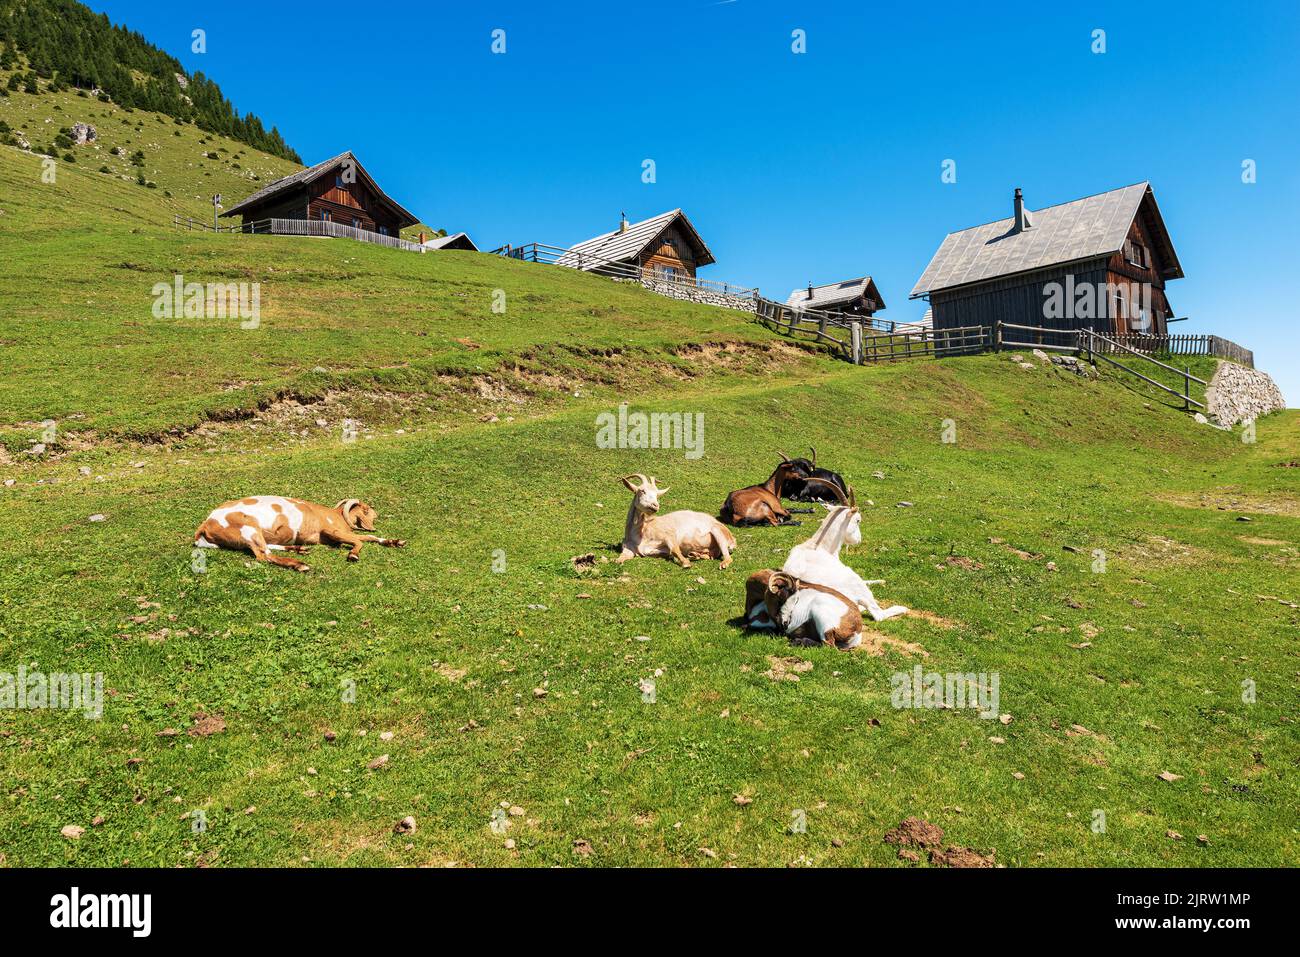 Alpine mountain chalets and a group of goats. Italy-Austria border, Feistritz an der Gail municipality, Osternig peak, Carinthia, Julian Alps, Austria Stock Photo